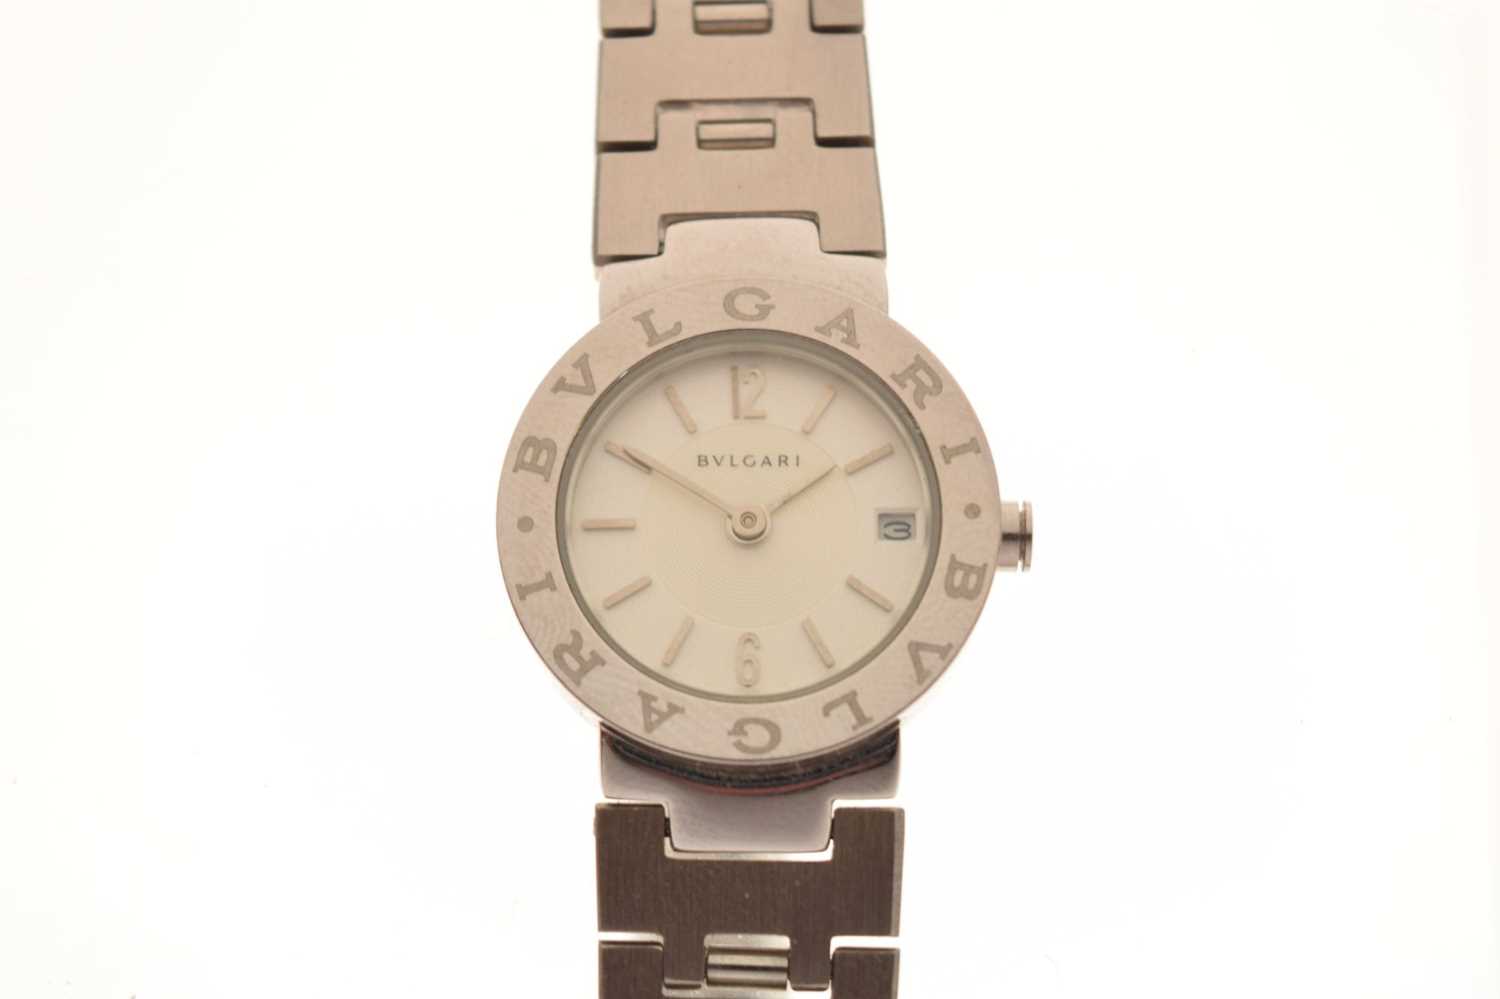 Bulgari - Lady's stainless steel quartz wristwatch - Image 2 of 10